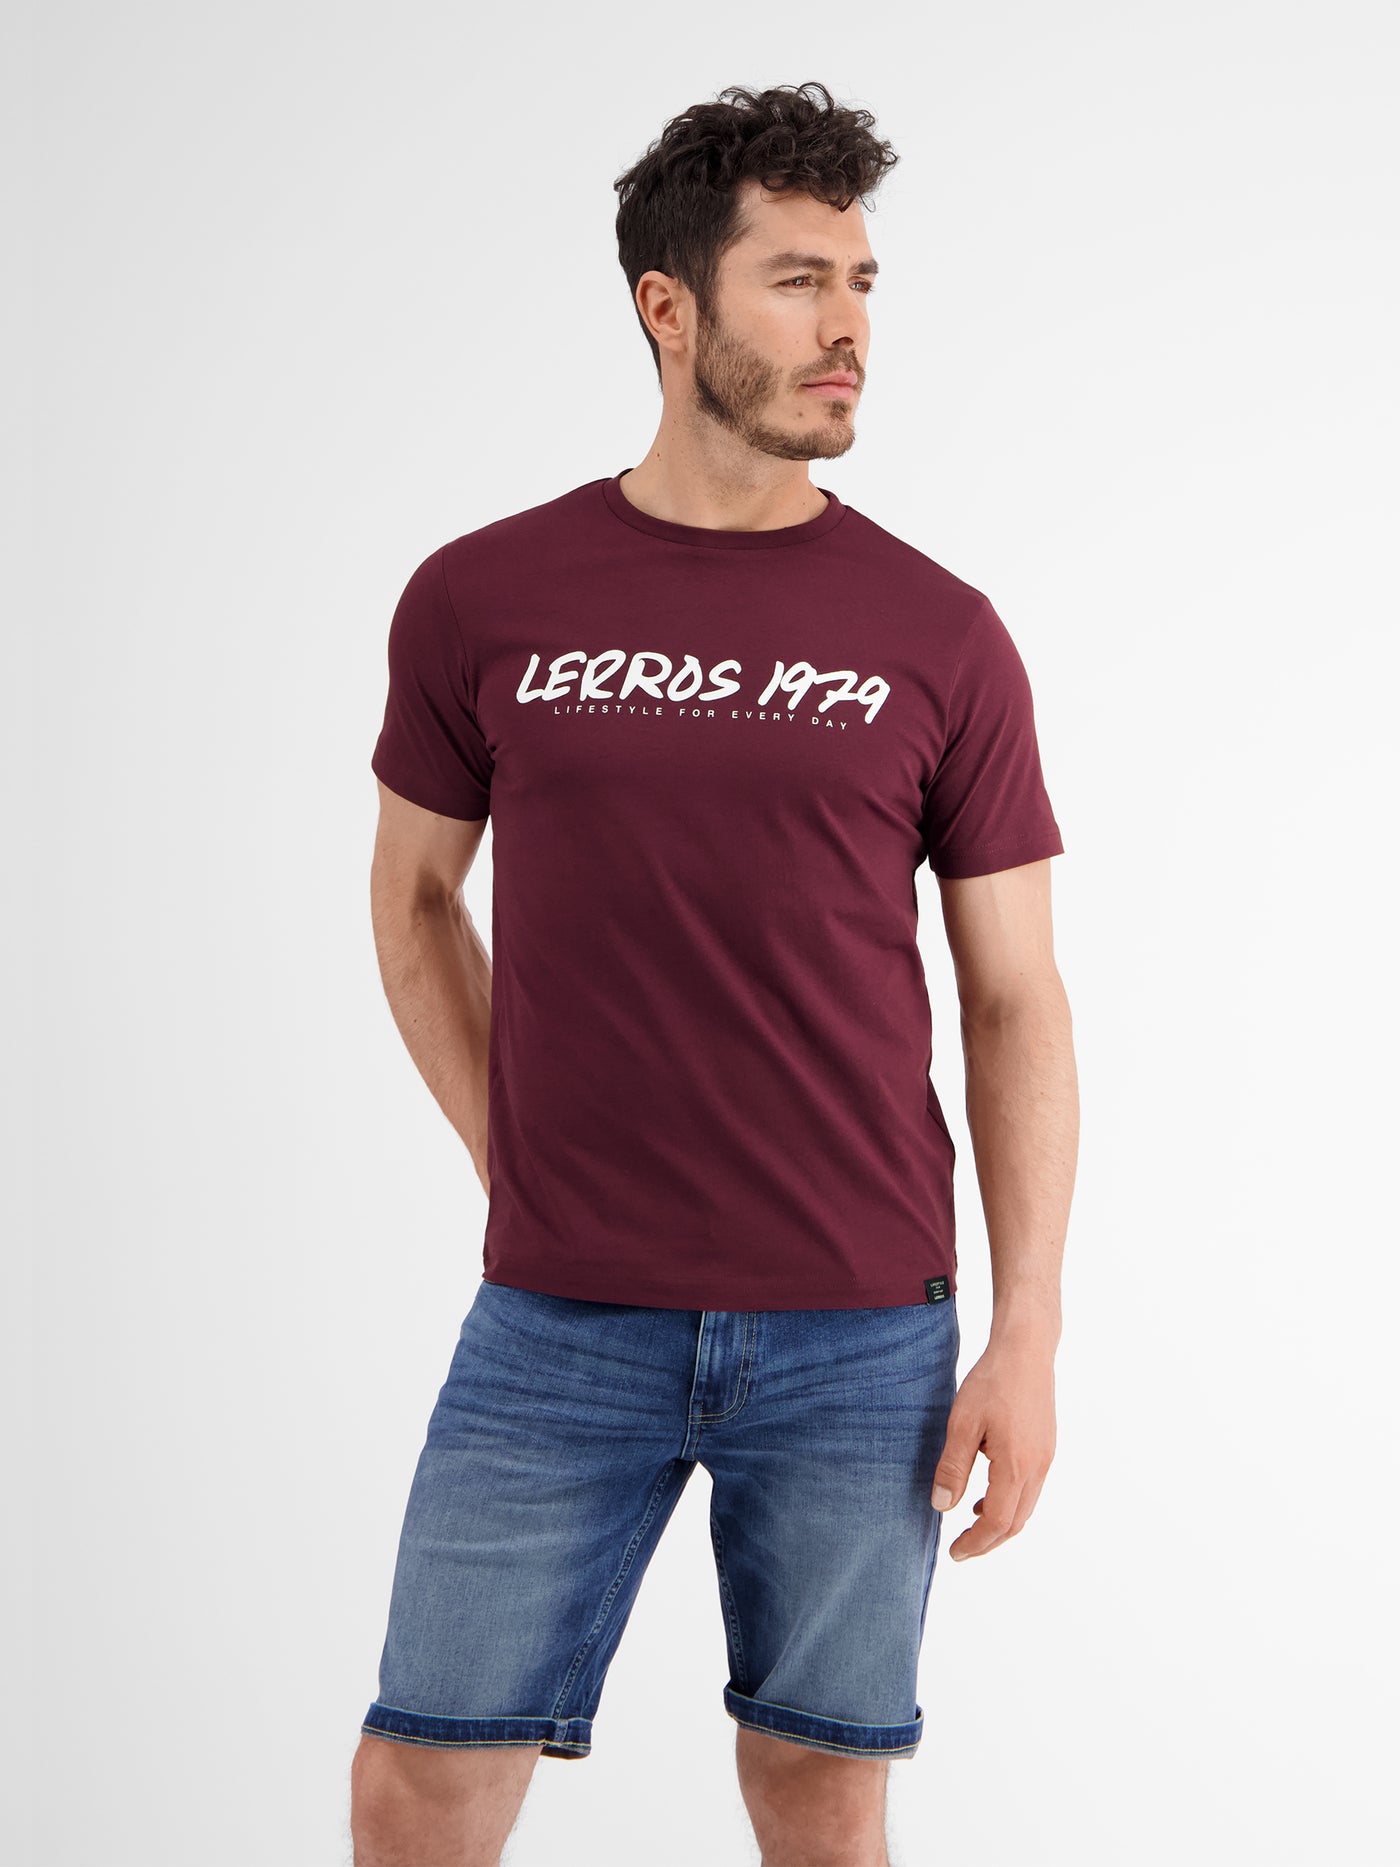 *LERROS – 1979* T-Shirt SHOP LERROS